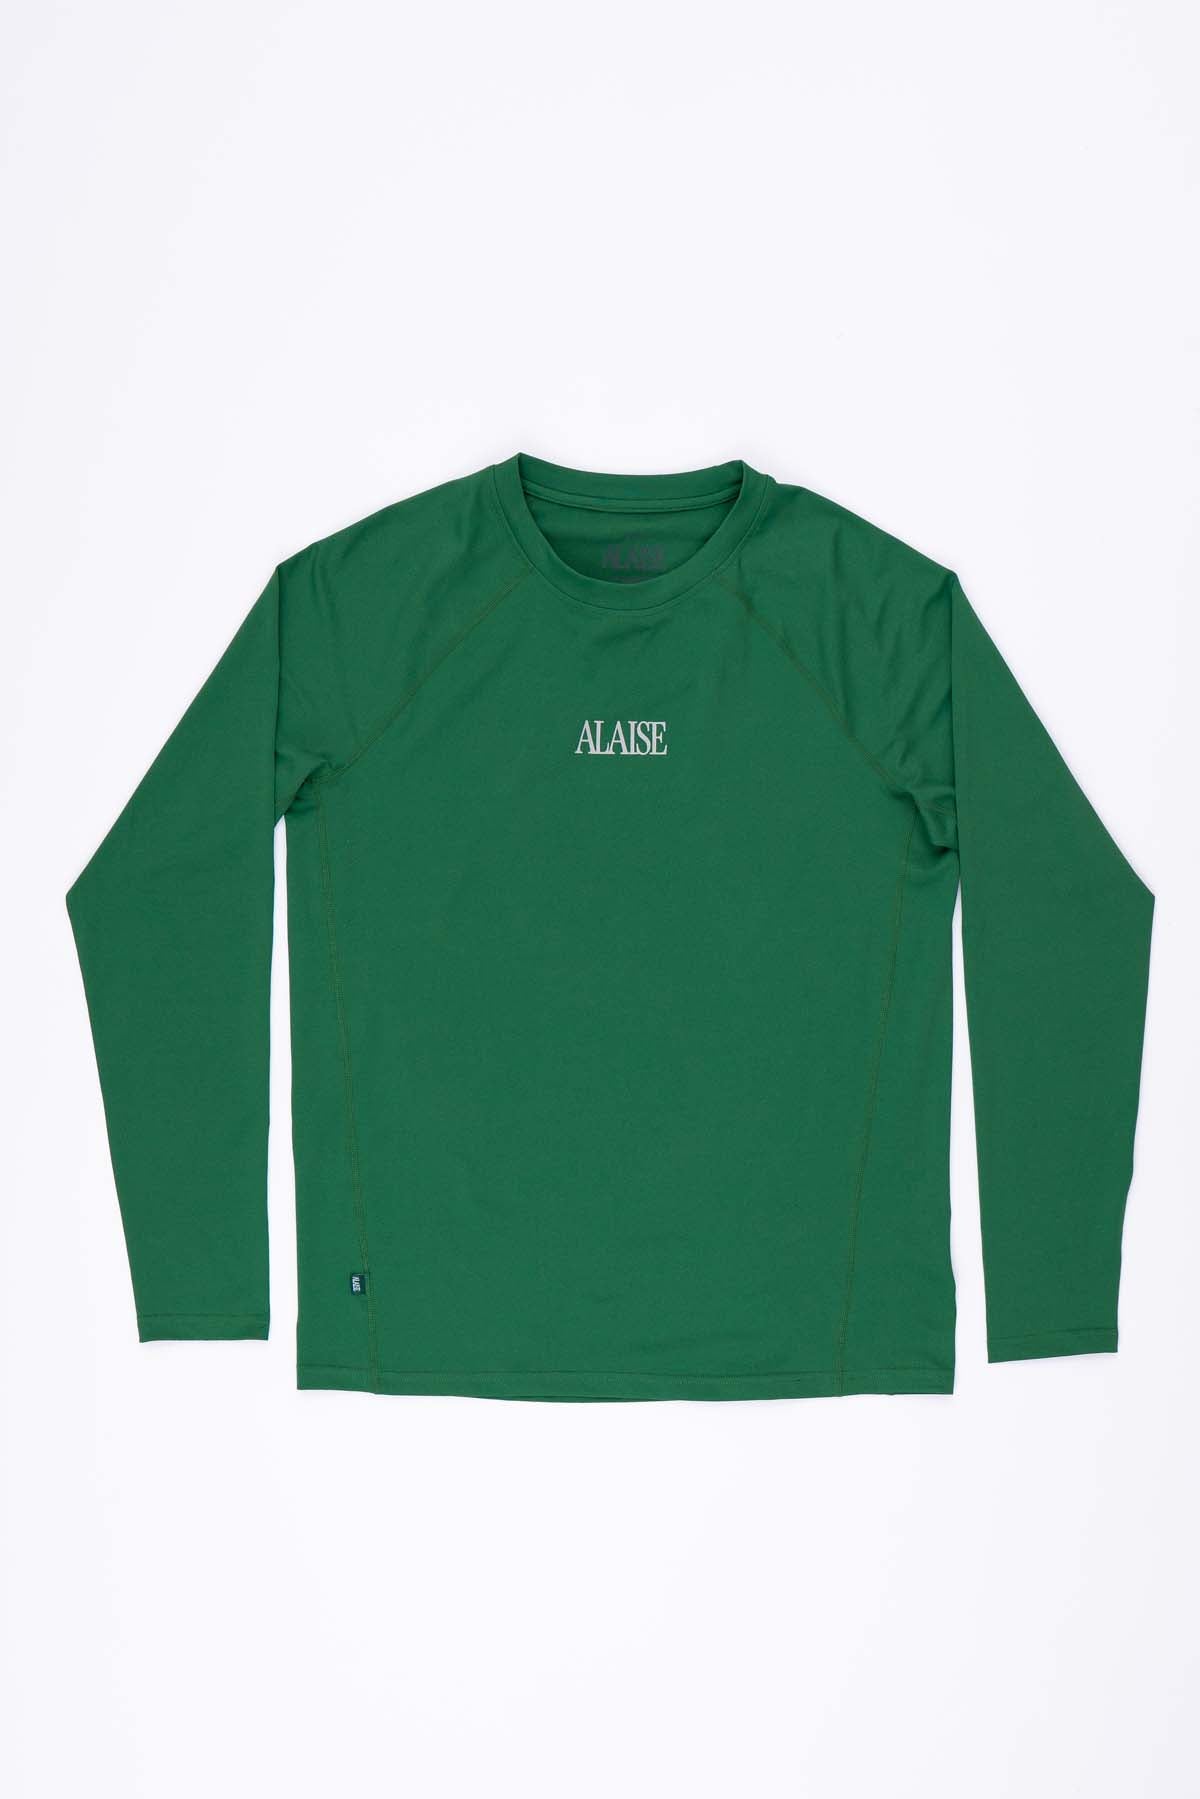 Alaise Active Long Sleeve Shirt - Green